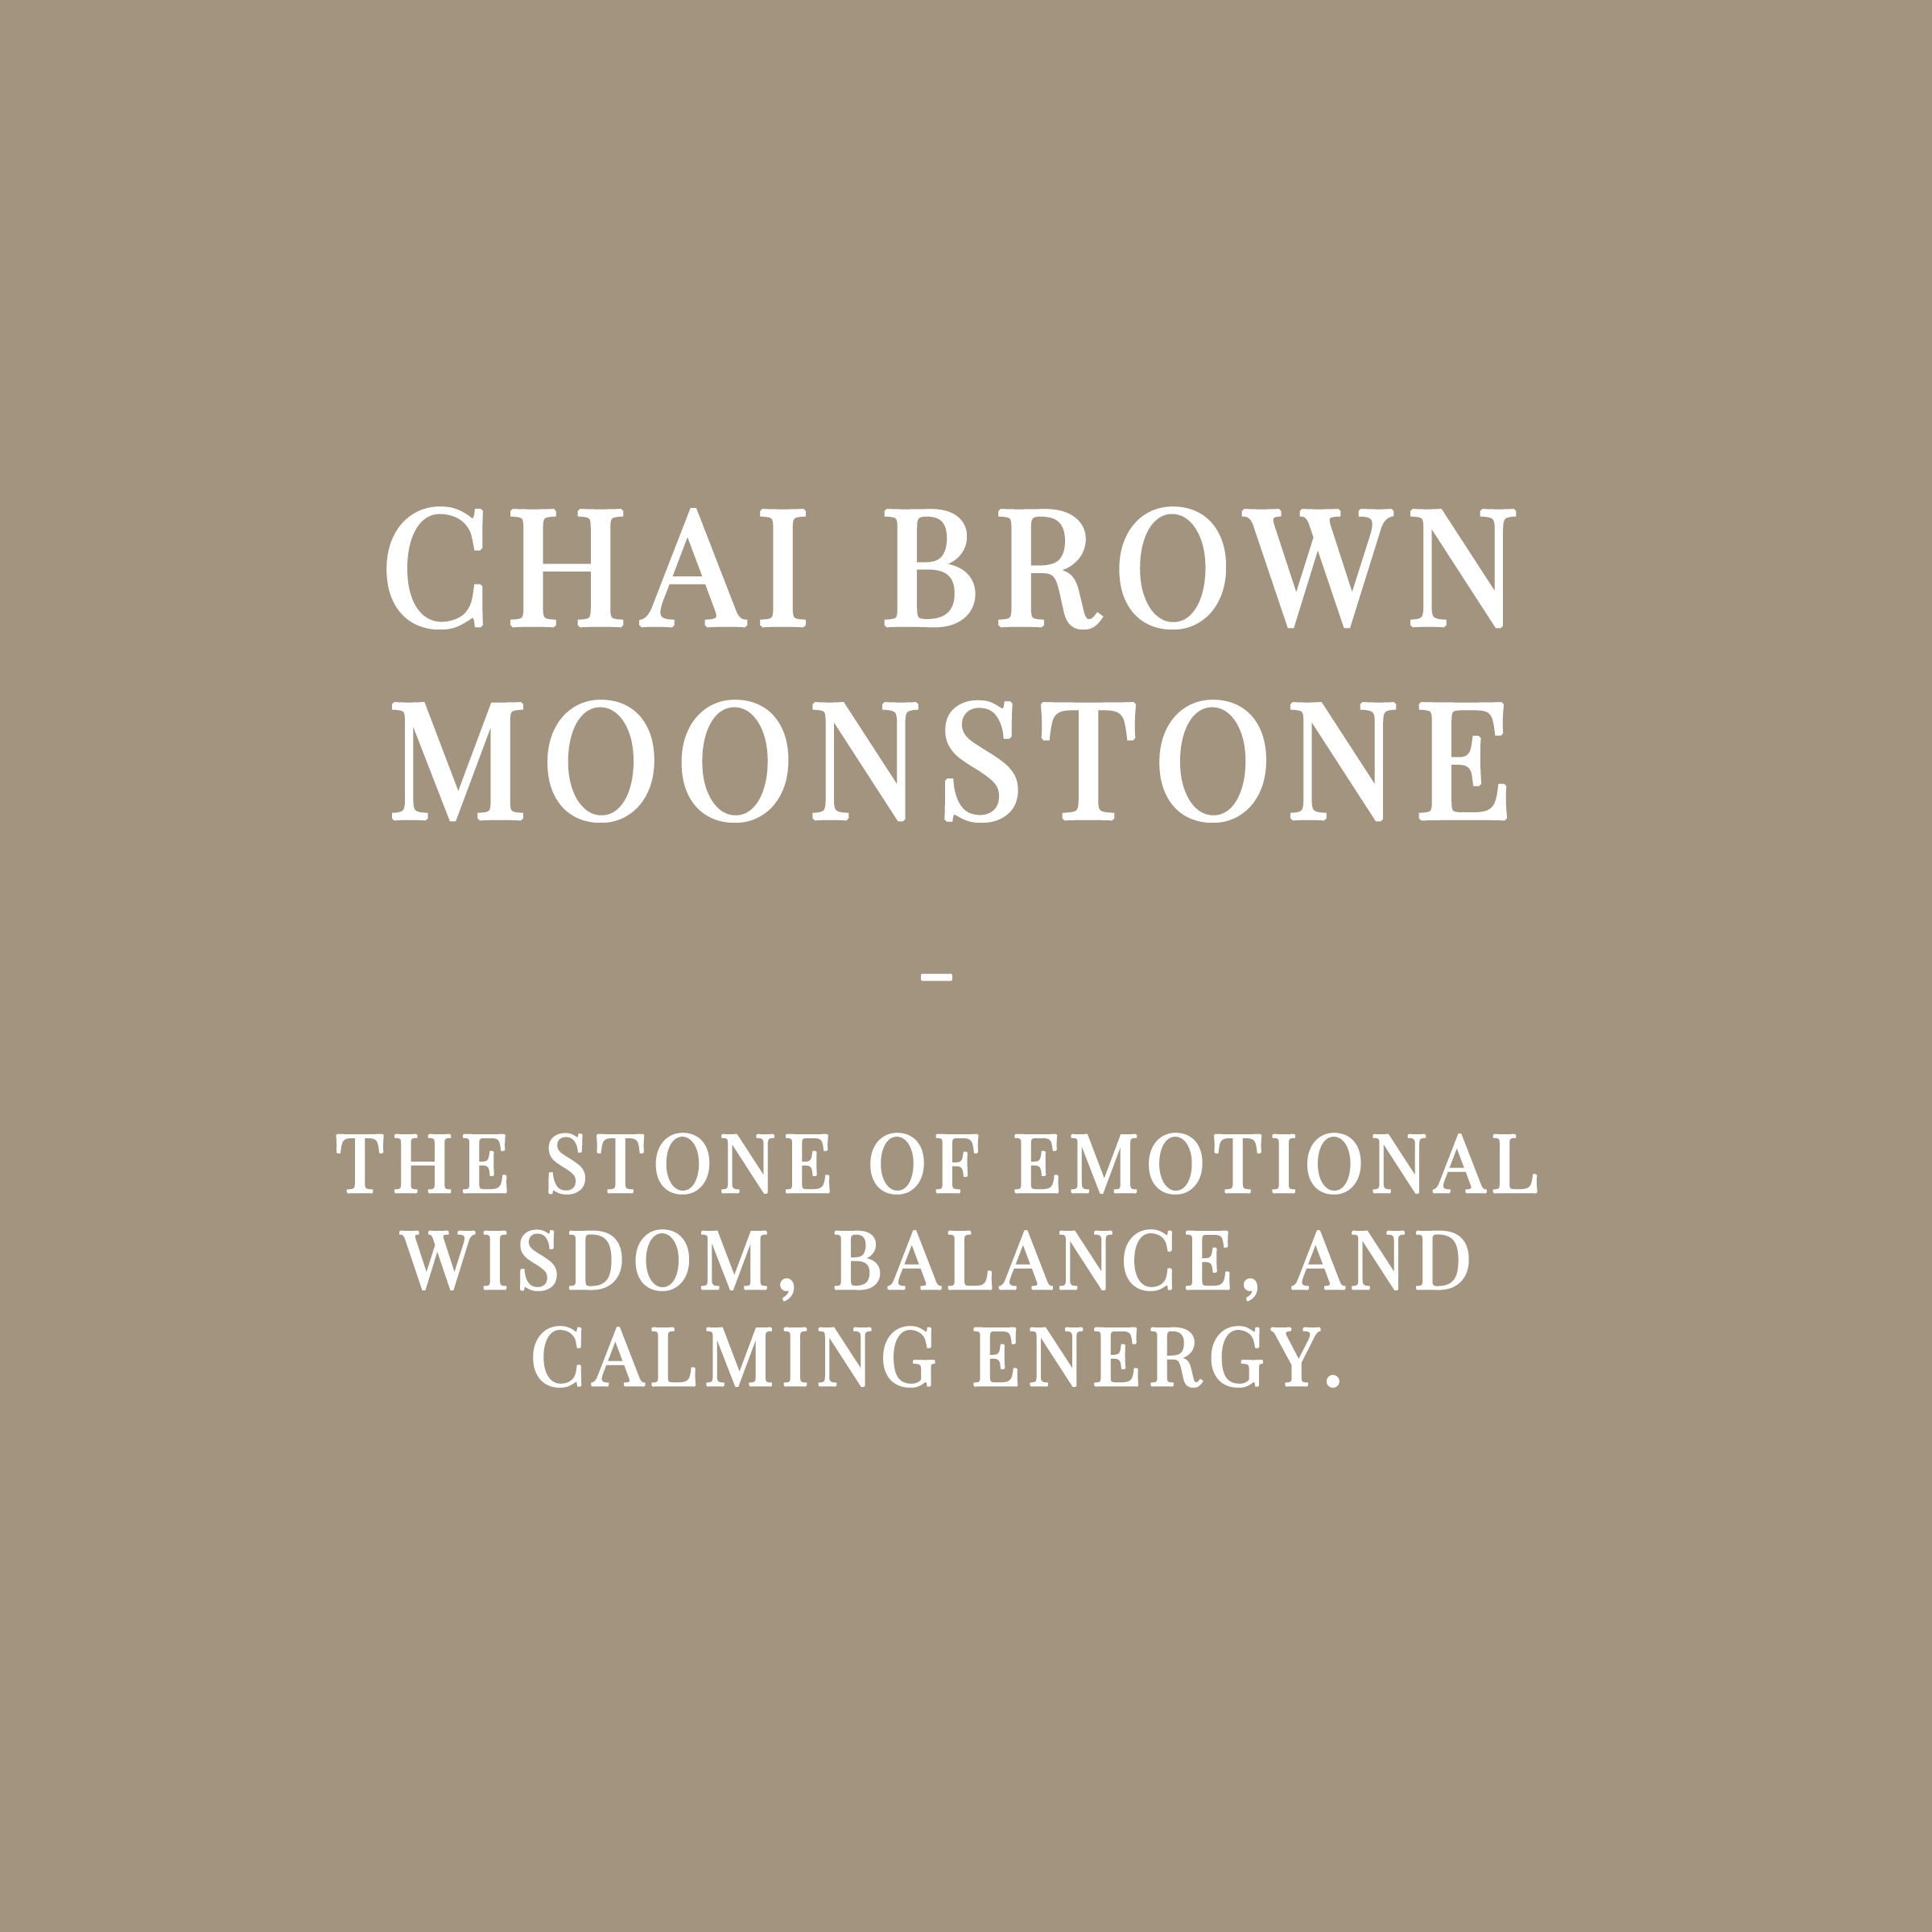 Chai Brown Moonstone